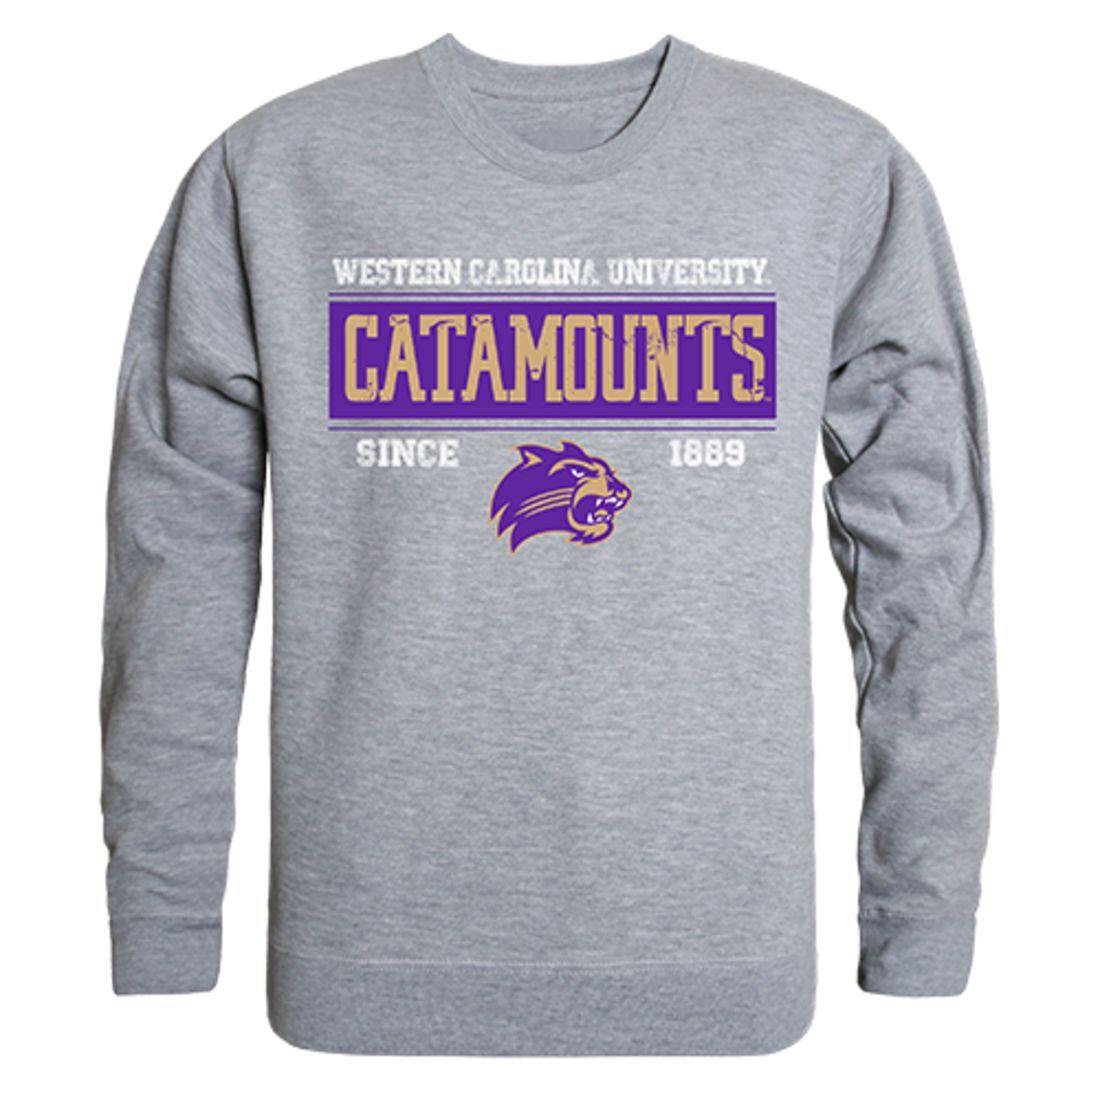 WCU Western Carolina University Catamounts Established Crewneck Pullover Sweatshirt Sweater Heather Grey-Campus-Wardrobe